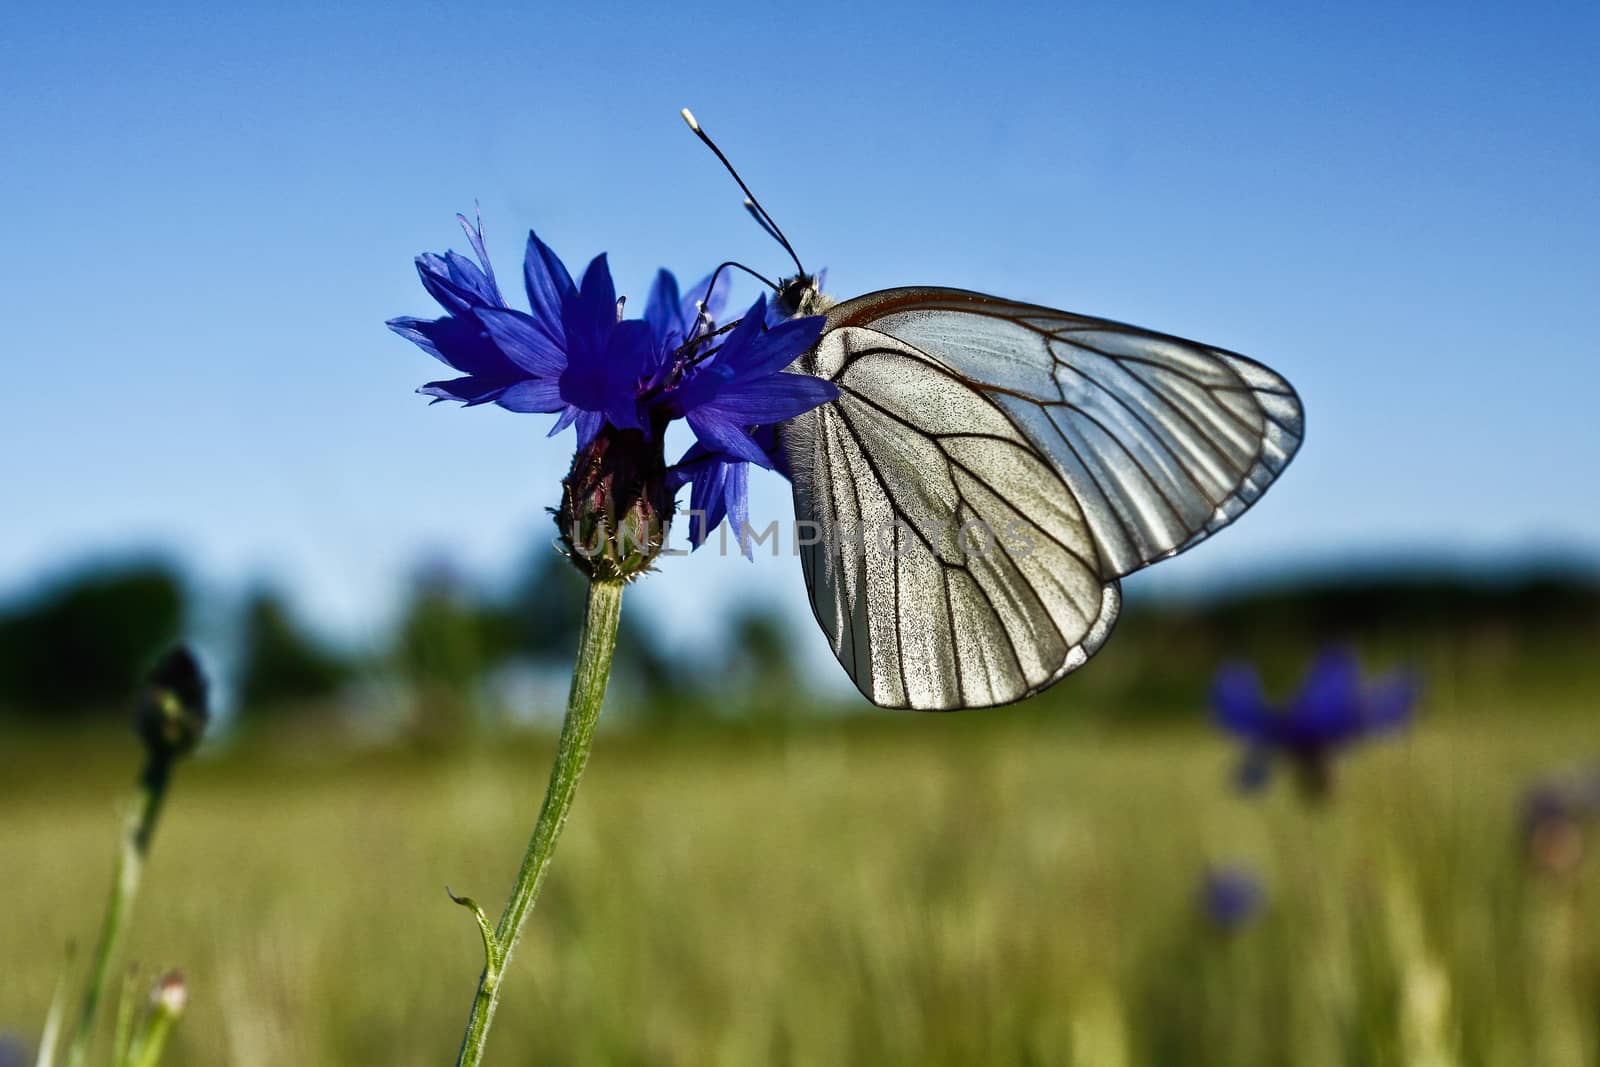 White butterfly on blue flower